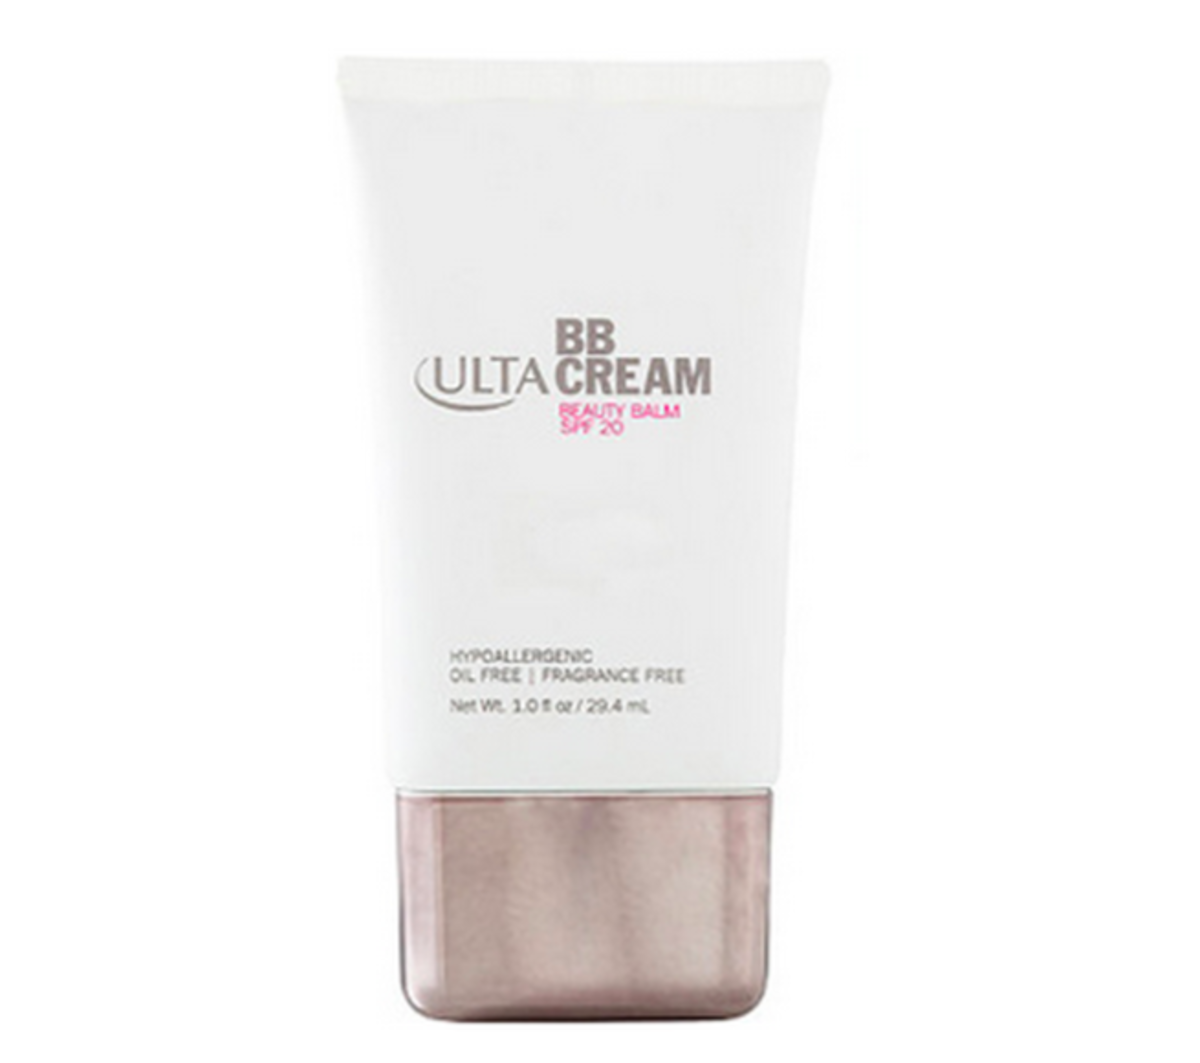 Ulta BB Cream